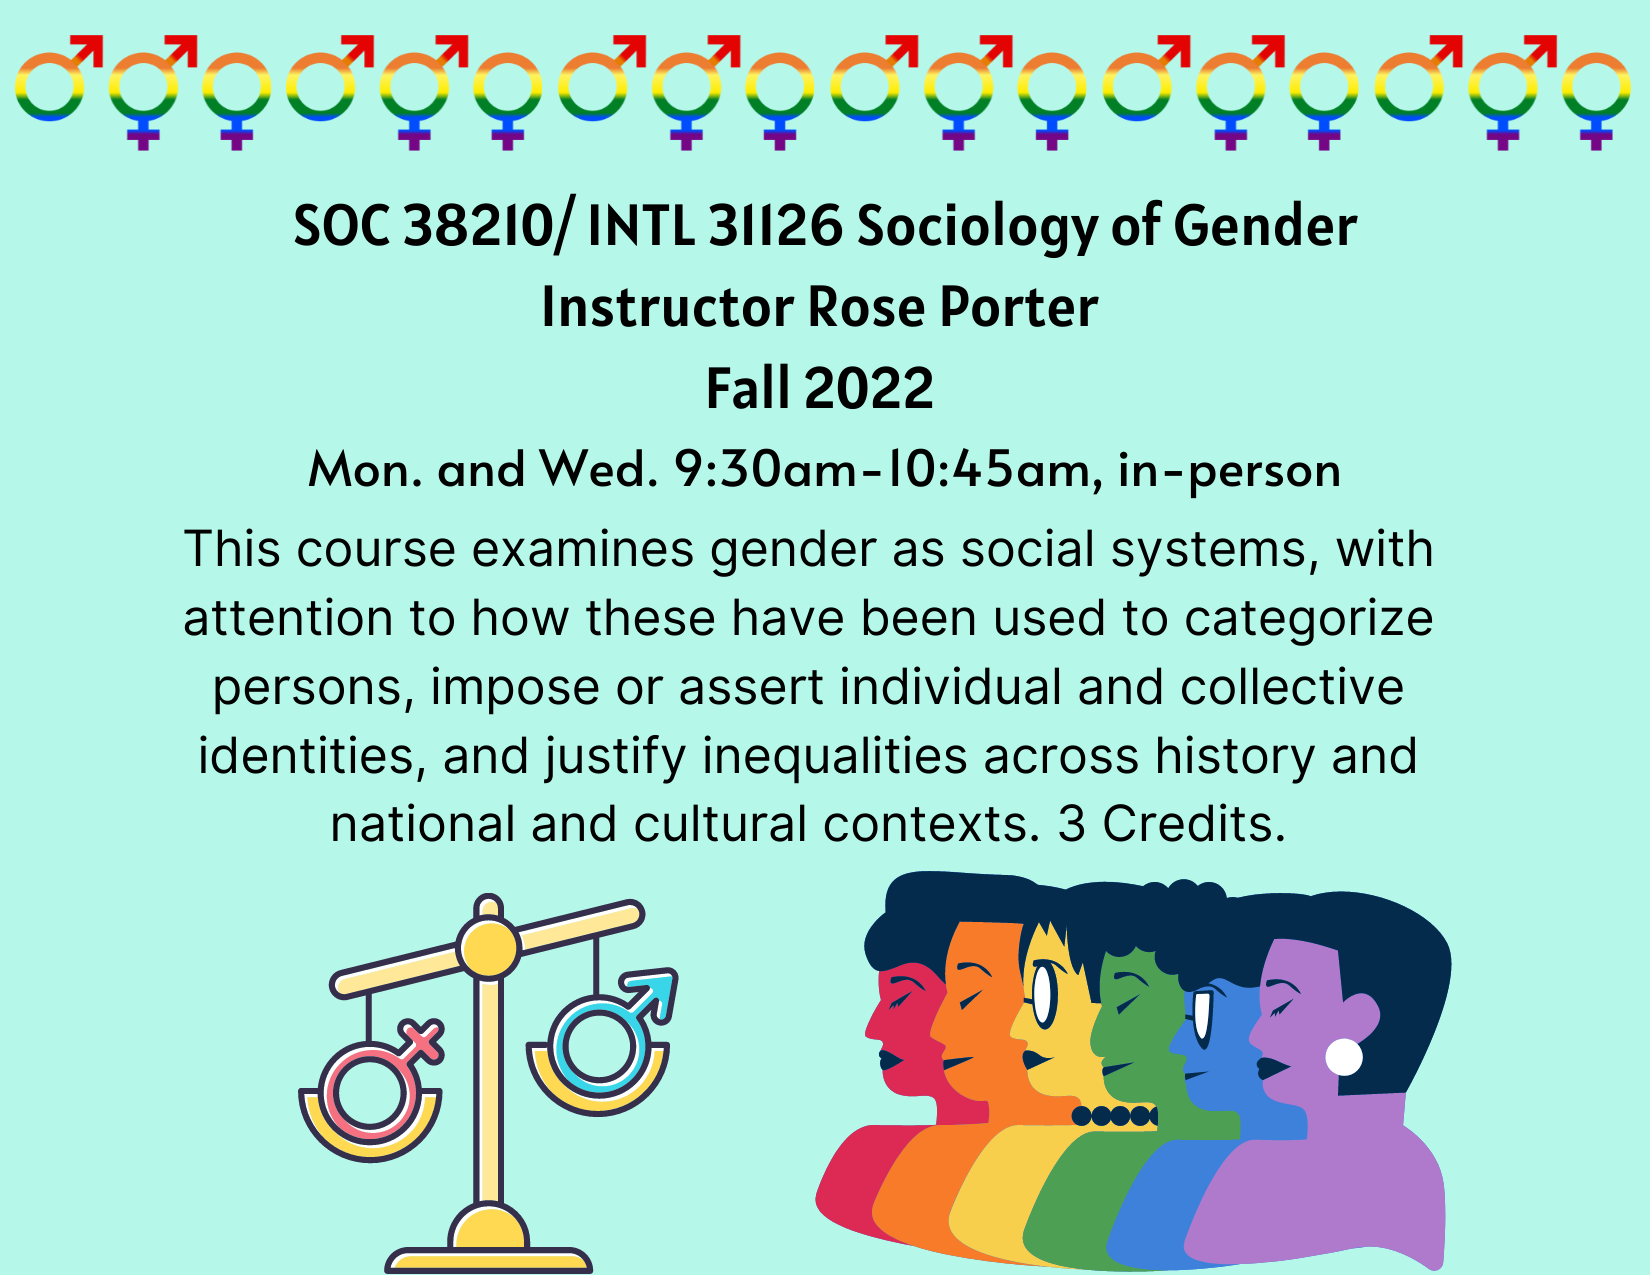 Sociology of Gender Course Description